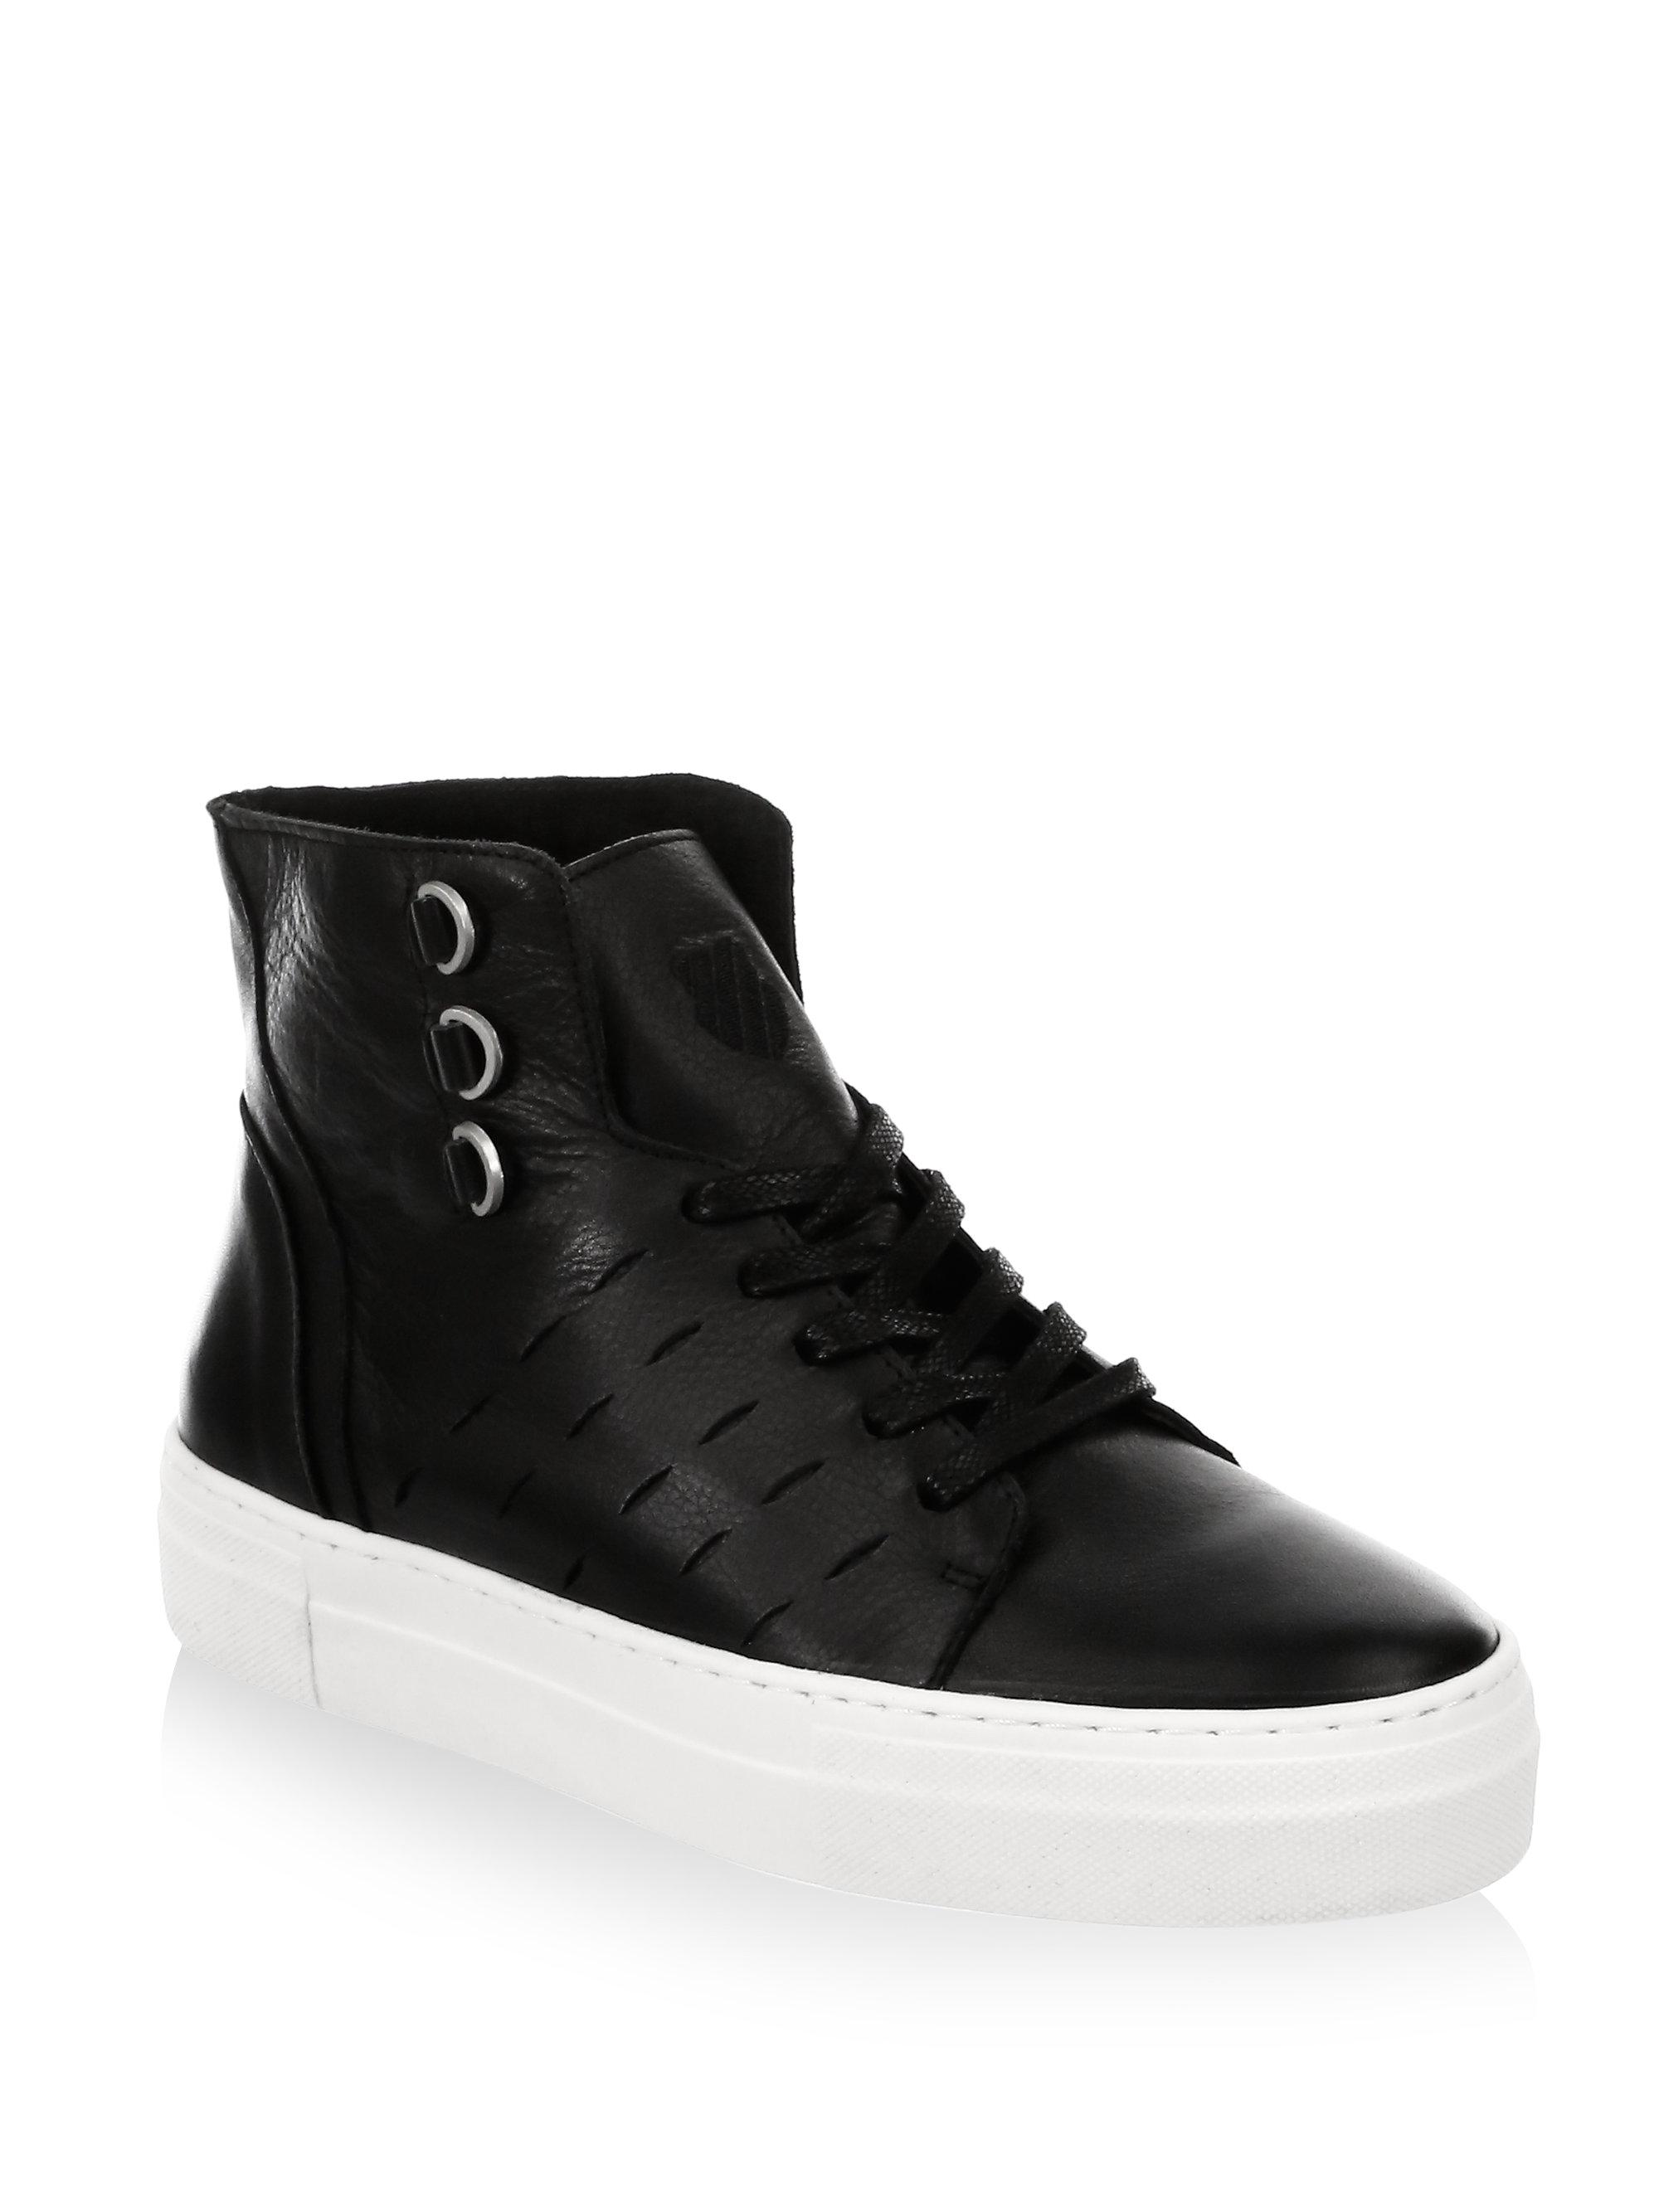 K-swiss Modern Leather High Top Sneakers in Black for Men - Lyst